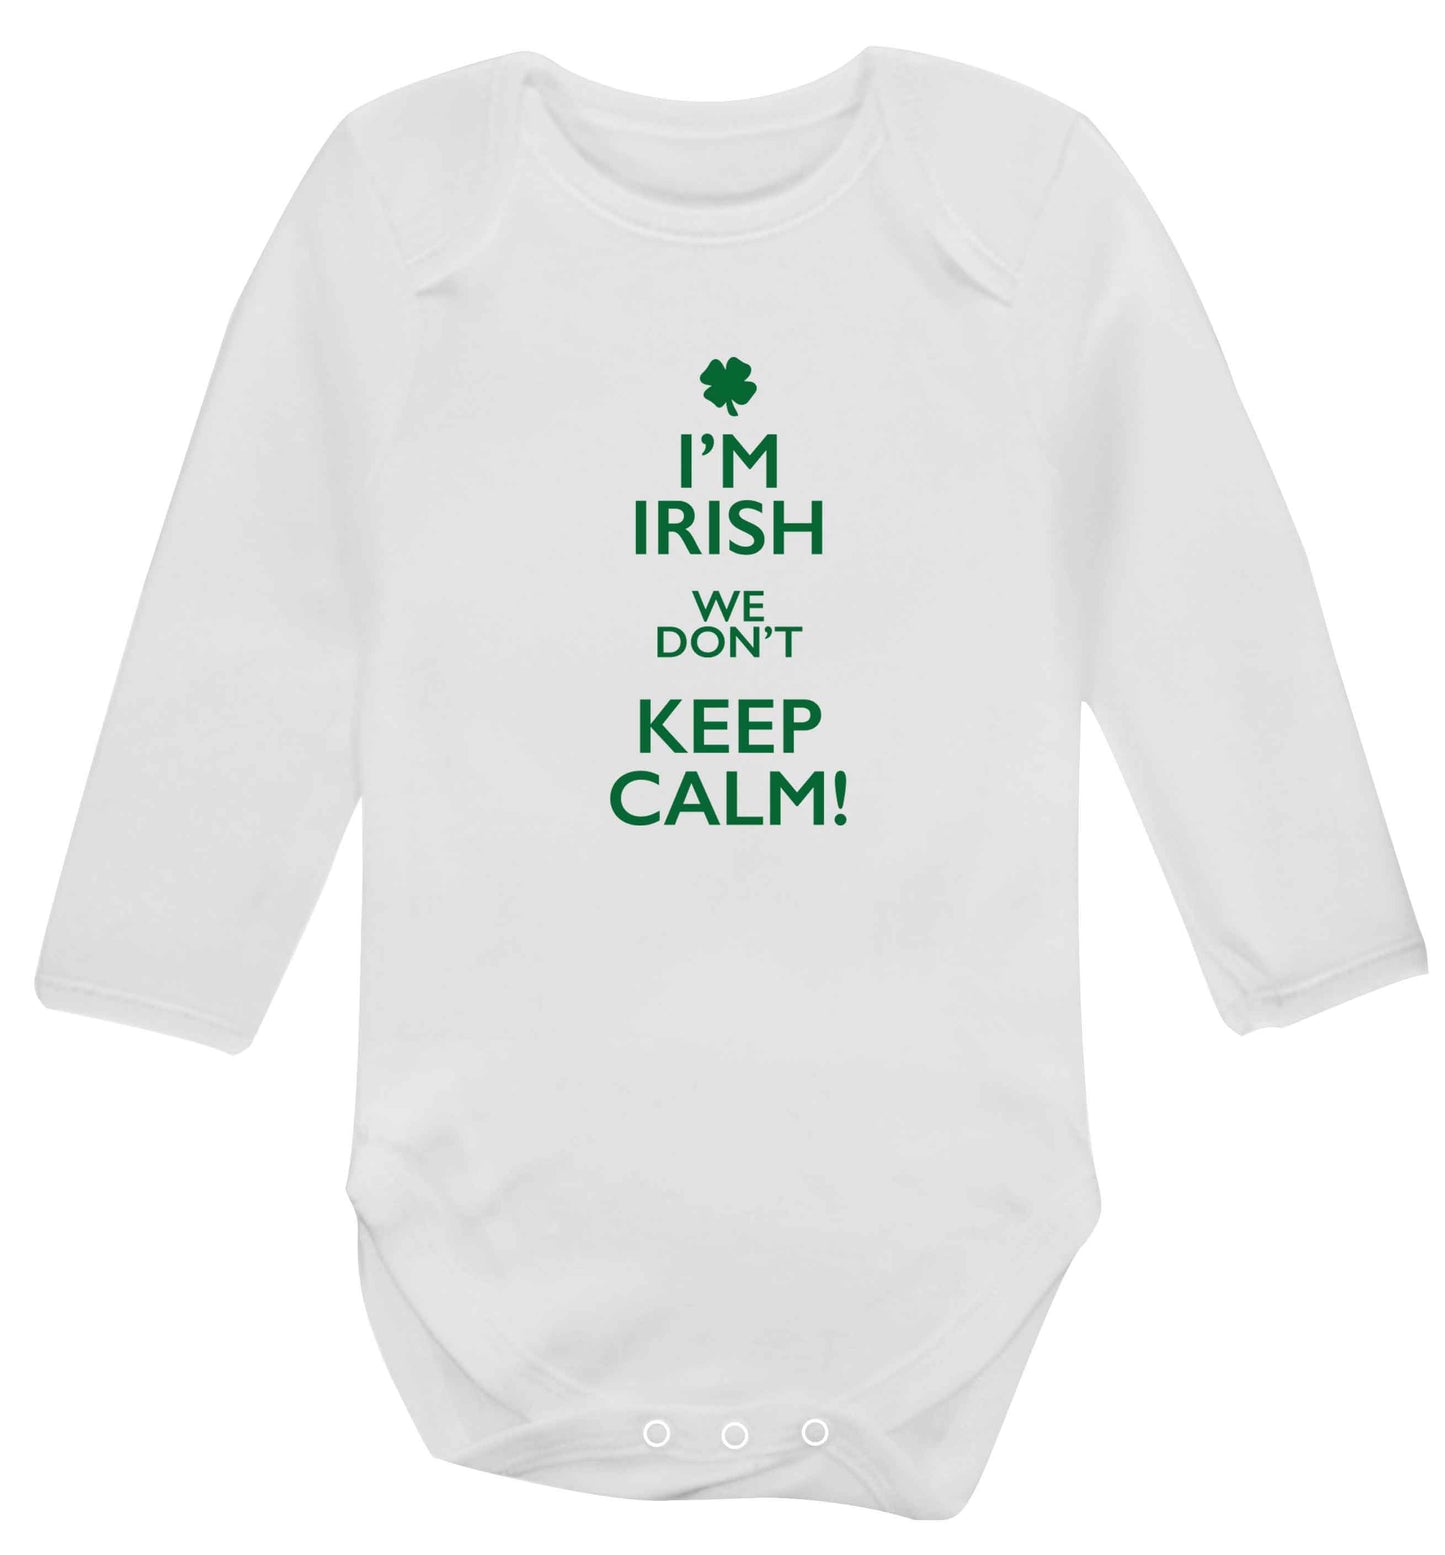 I'm Irish we don't keep calm baby vest long sleeved white 6-12 months